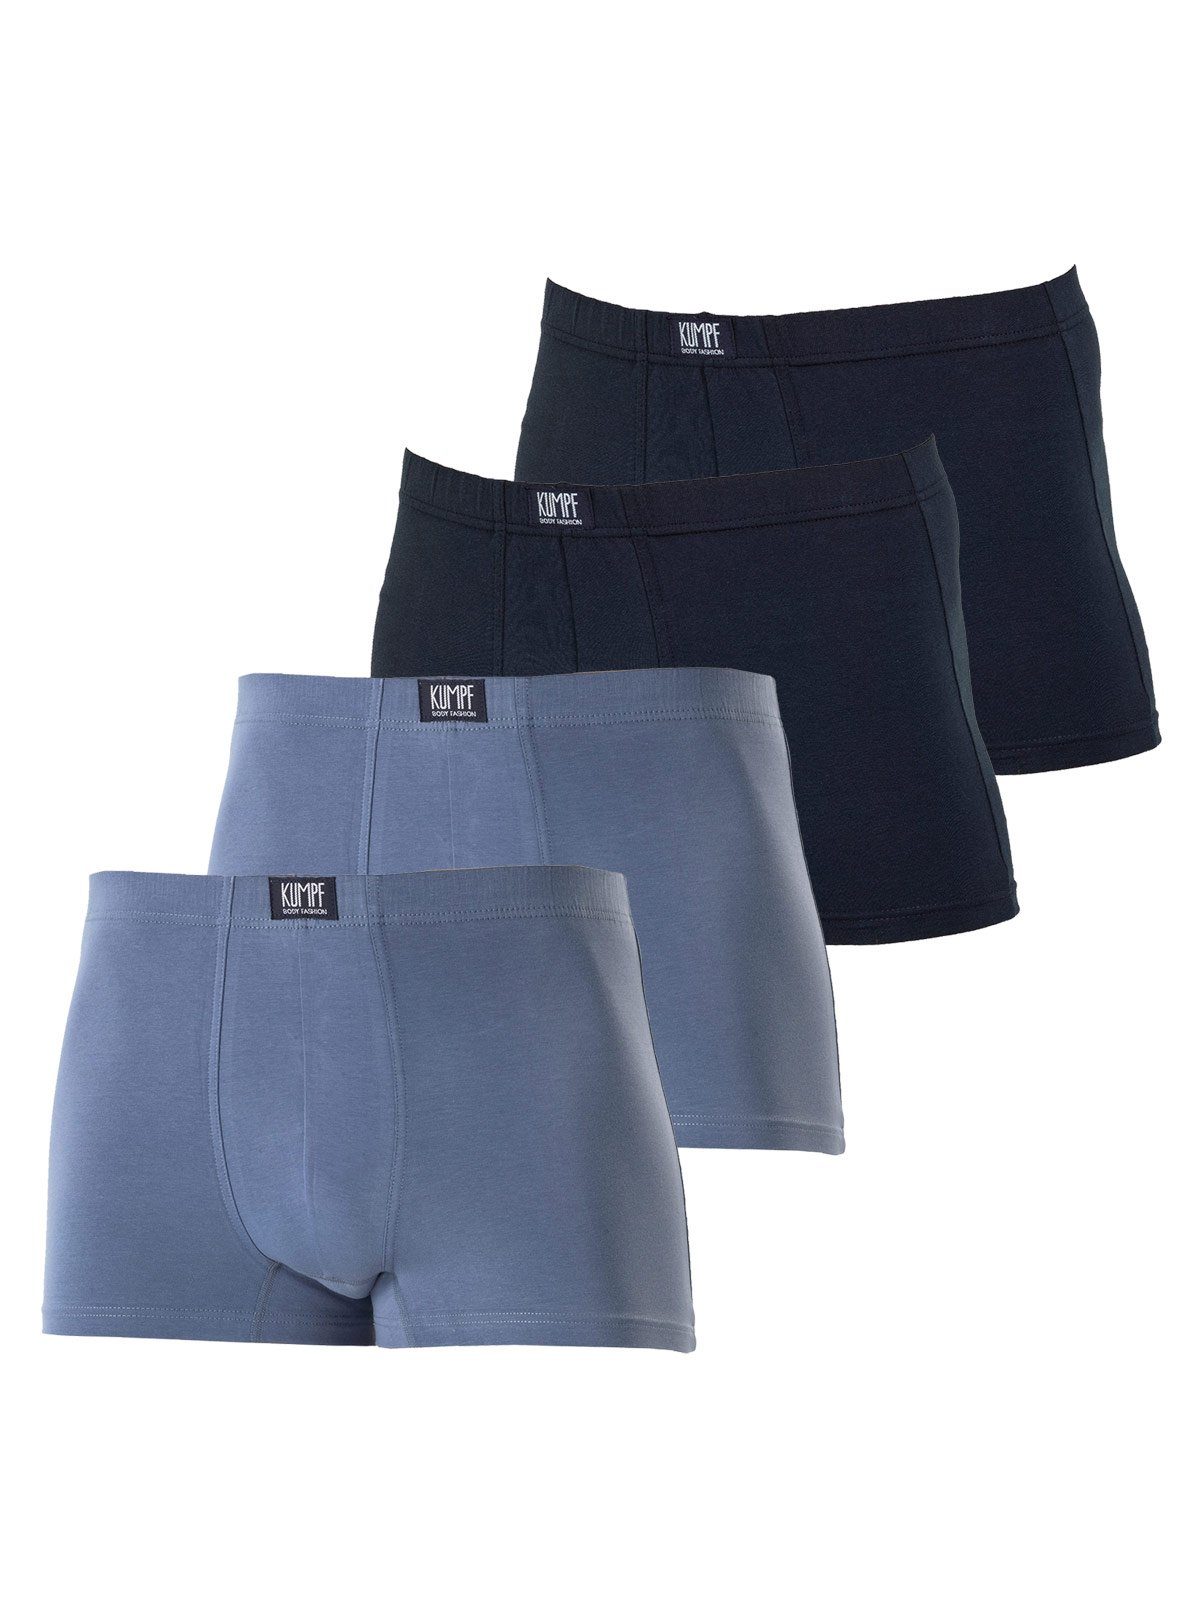 KUMPF Retro Pants 4er Sparpack Herren Pants Bio Cotton (Spar-Set, 4-St) hohe Markenqualität navy stahl | Unterhosen